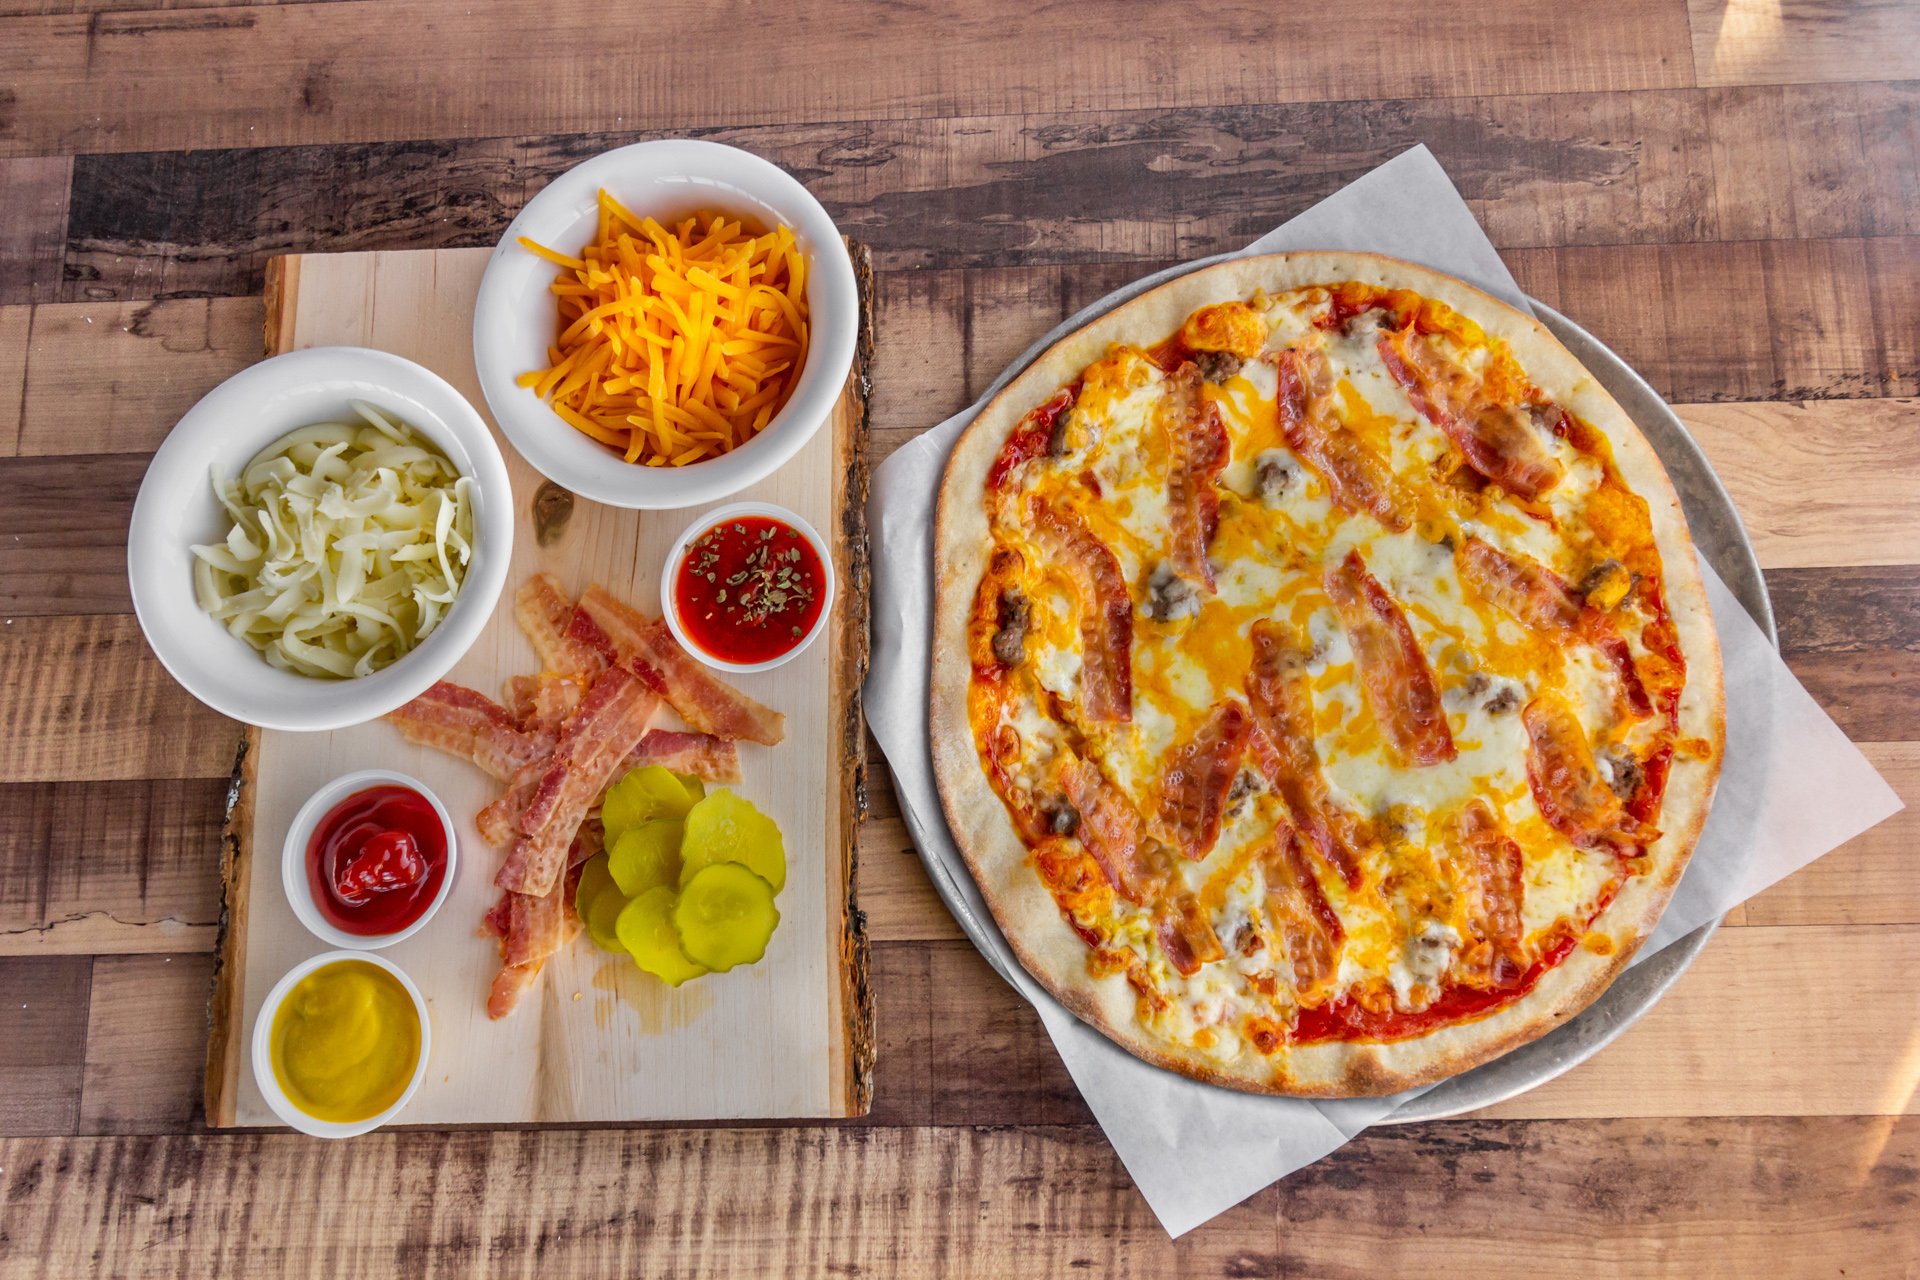 Papa John's Pizza - Home - Costa Mesa, California - Menu, prices,  restaurant reviews